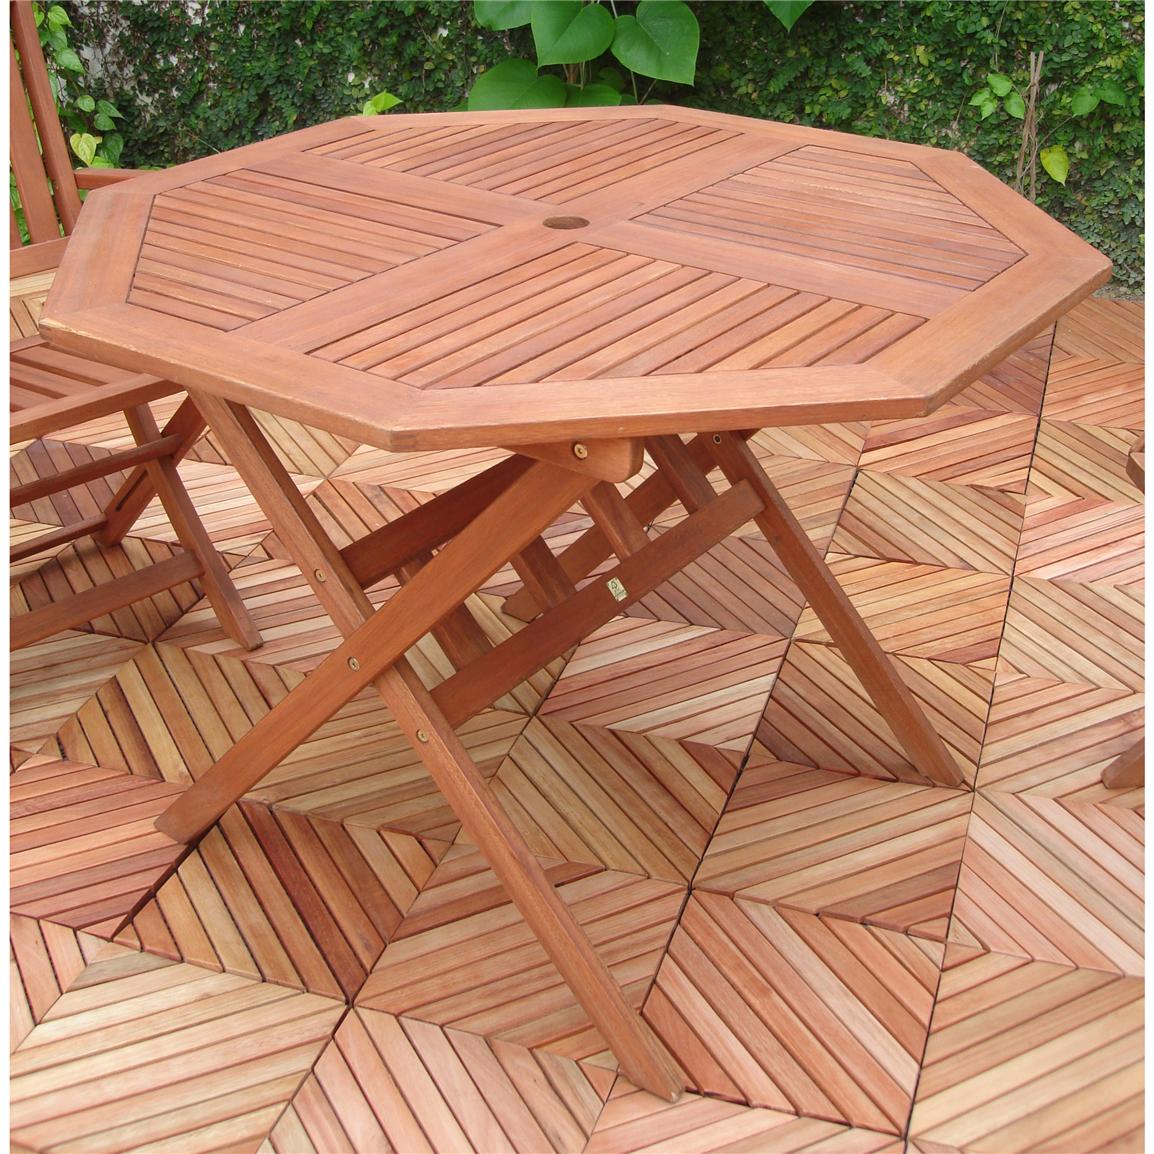 Vifah® Octagonal Outdoor Wood Table 218658 Patio Furniture At